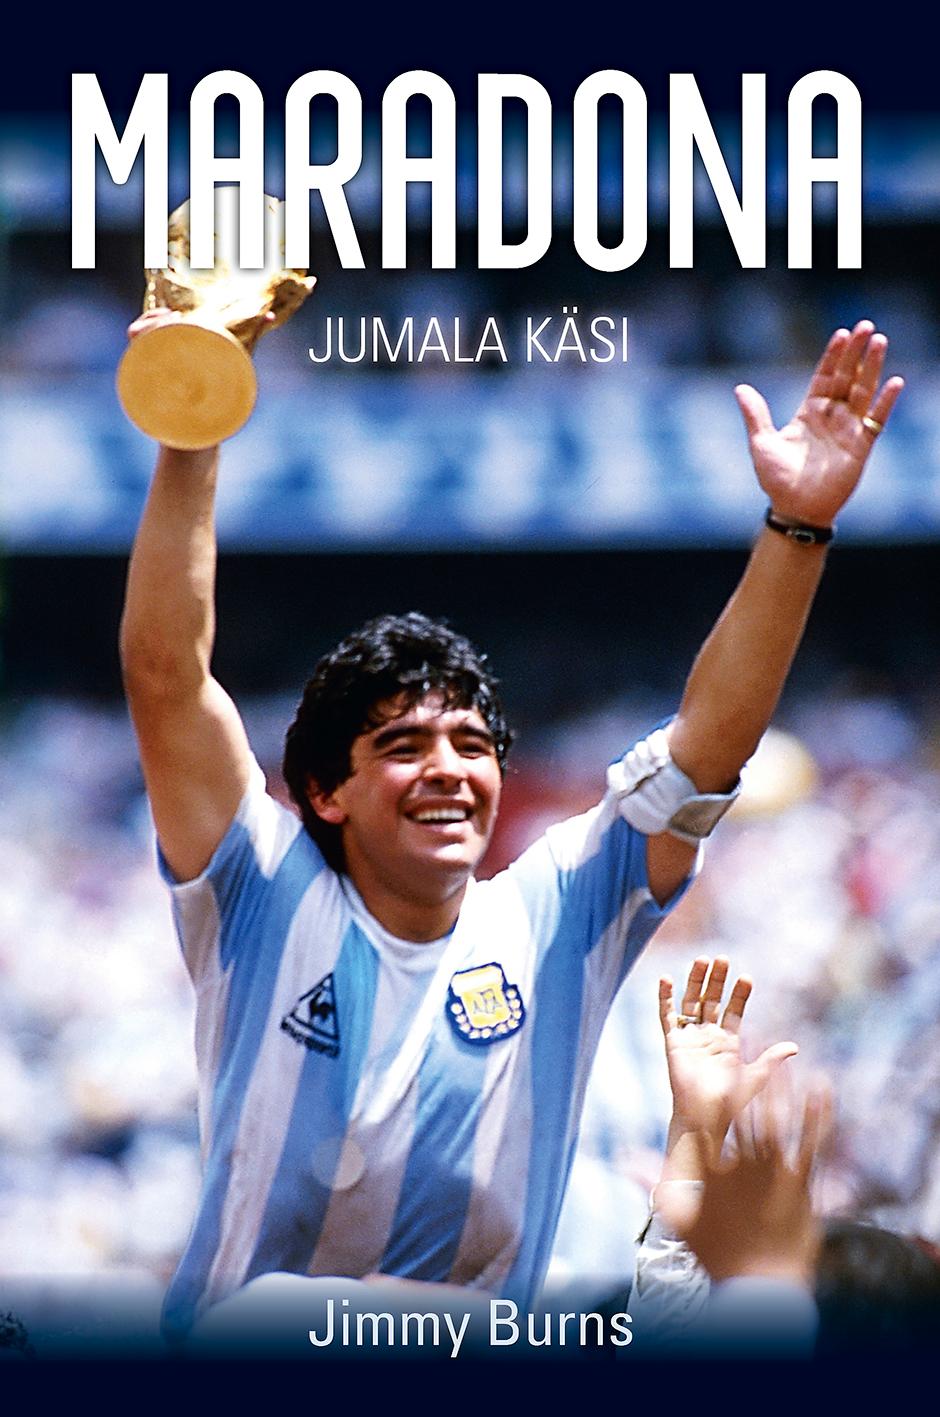 Maradona: jumala käsi